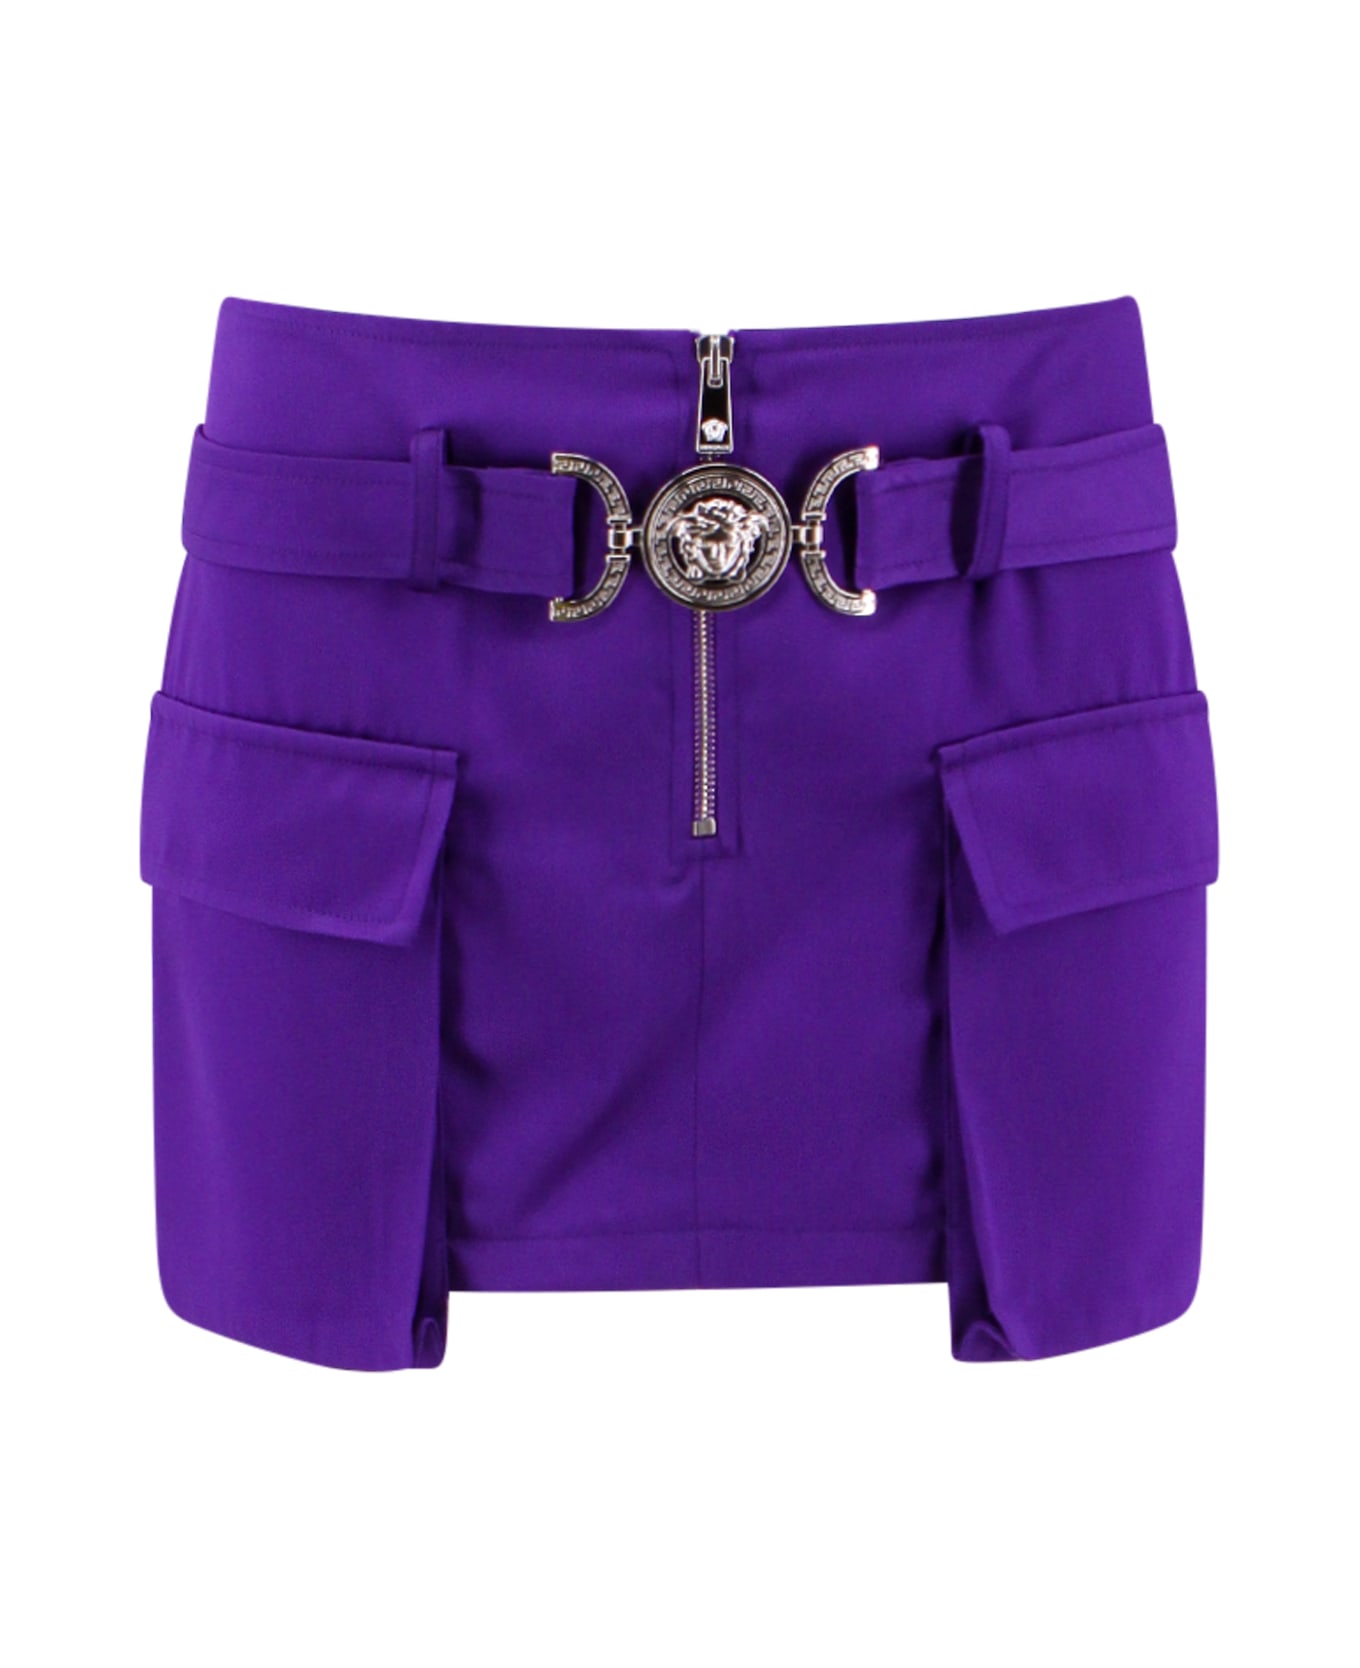 Versace Skirt - Purple